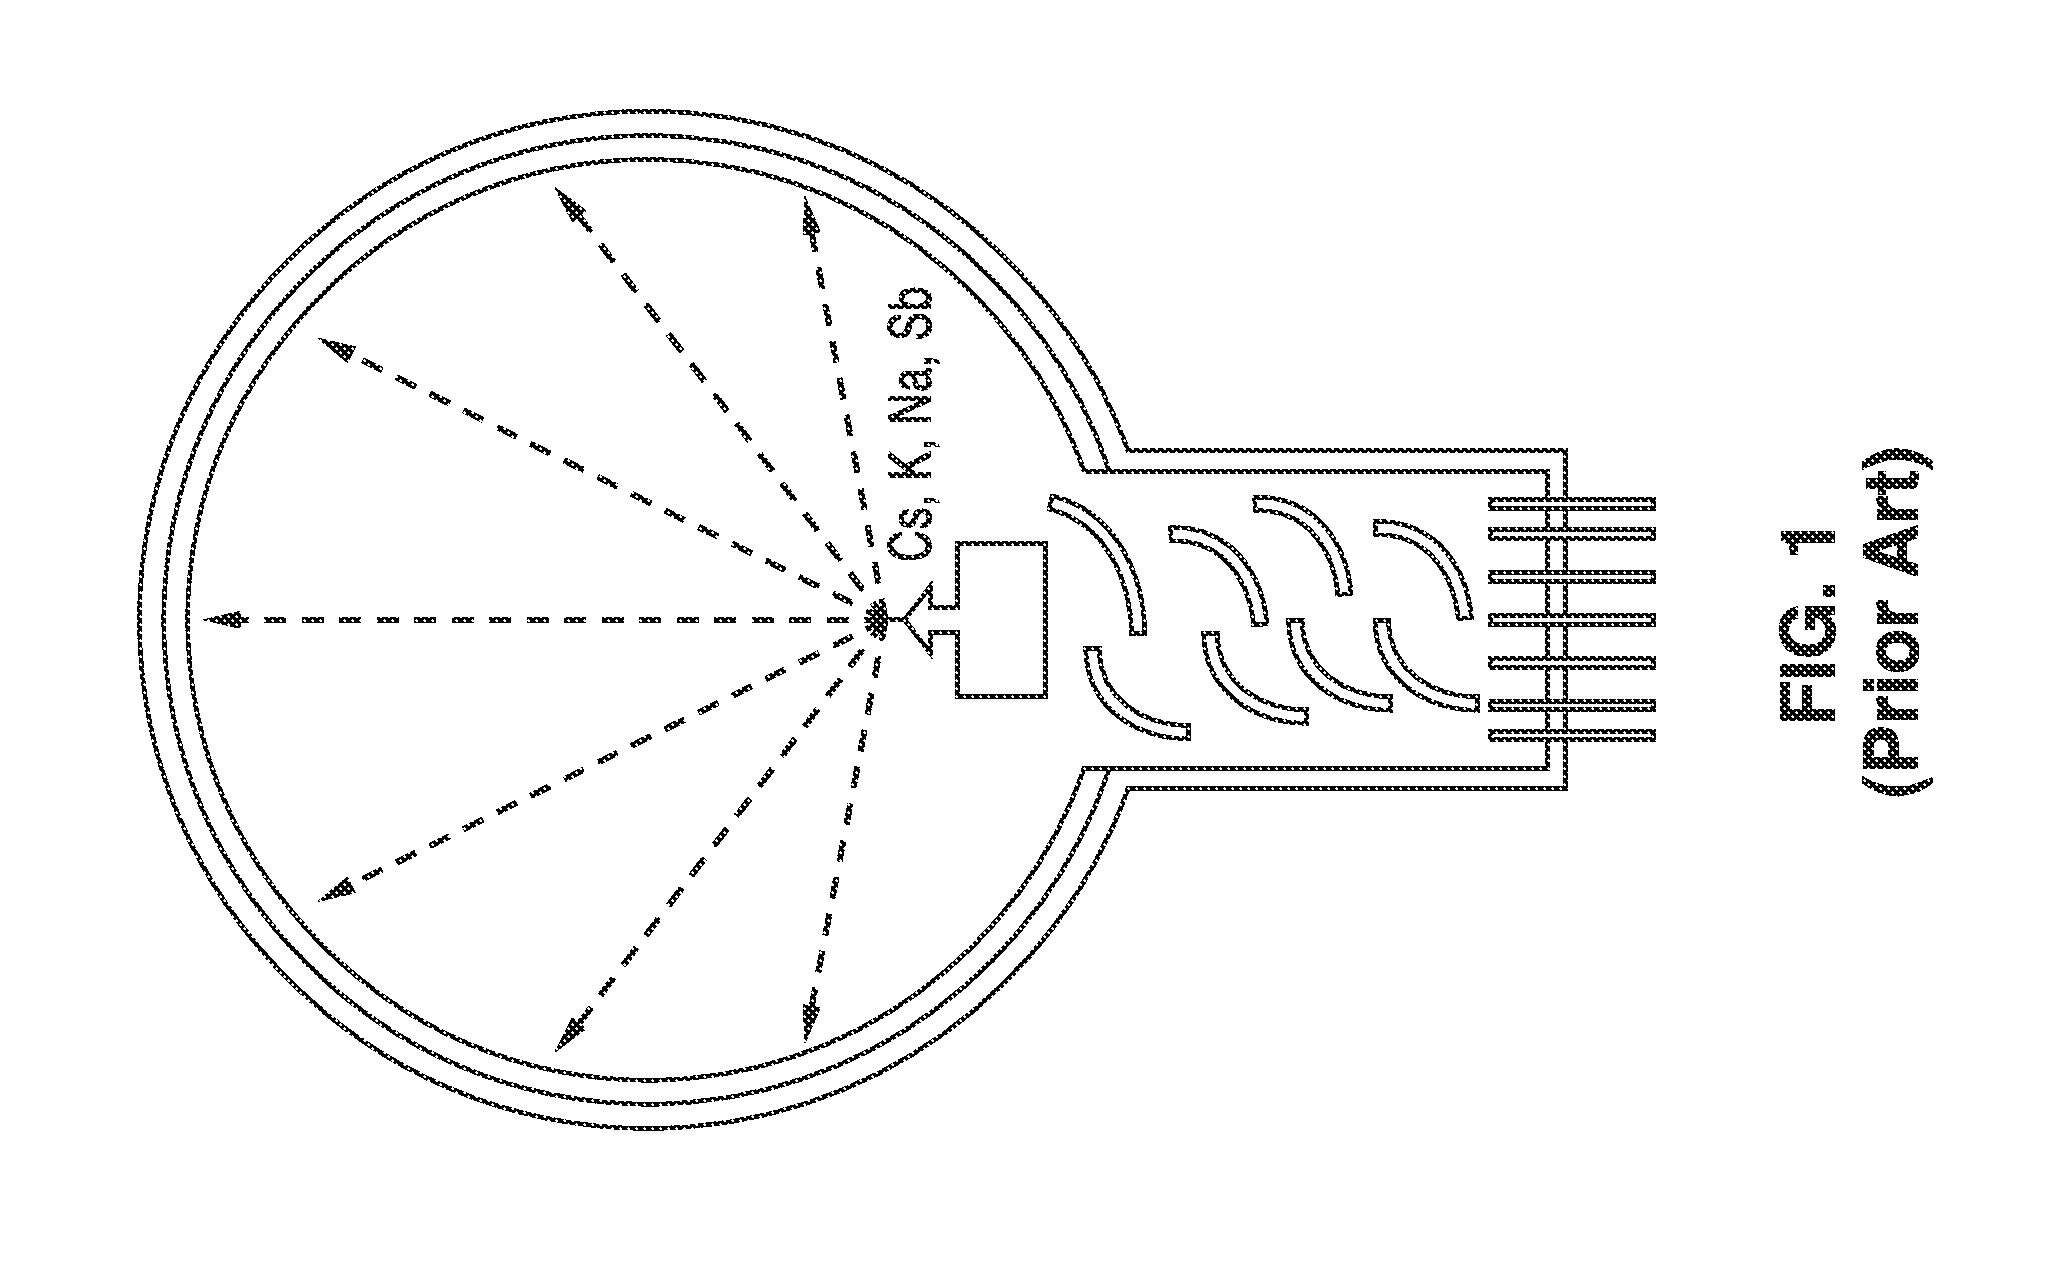 Vacuum photosensor device with electron lensing